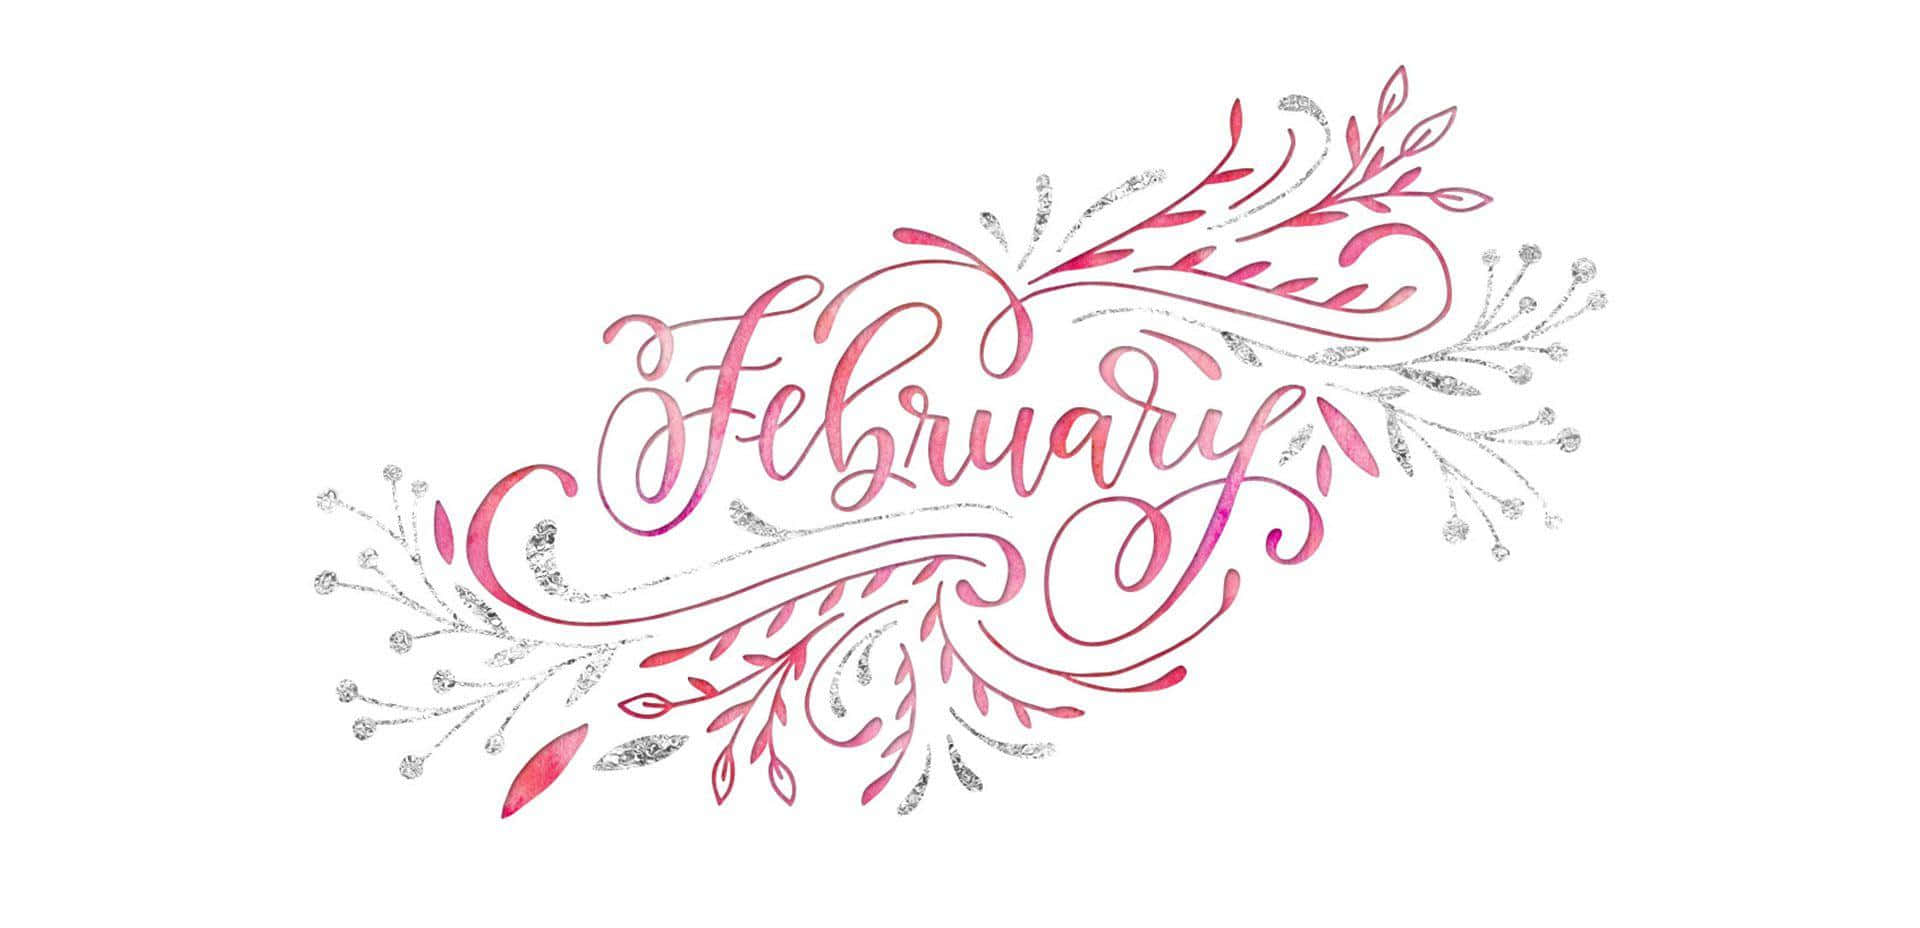 Enjoy the Romantic magic of February